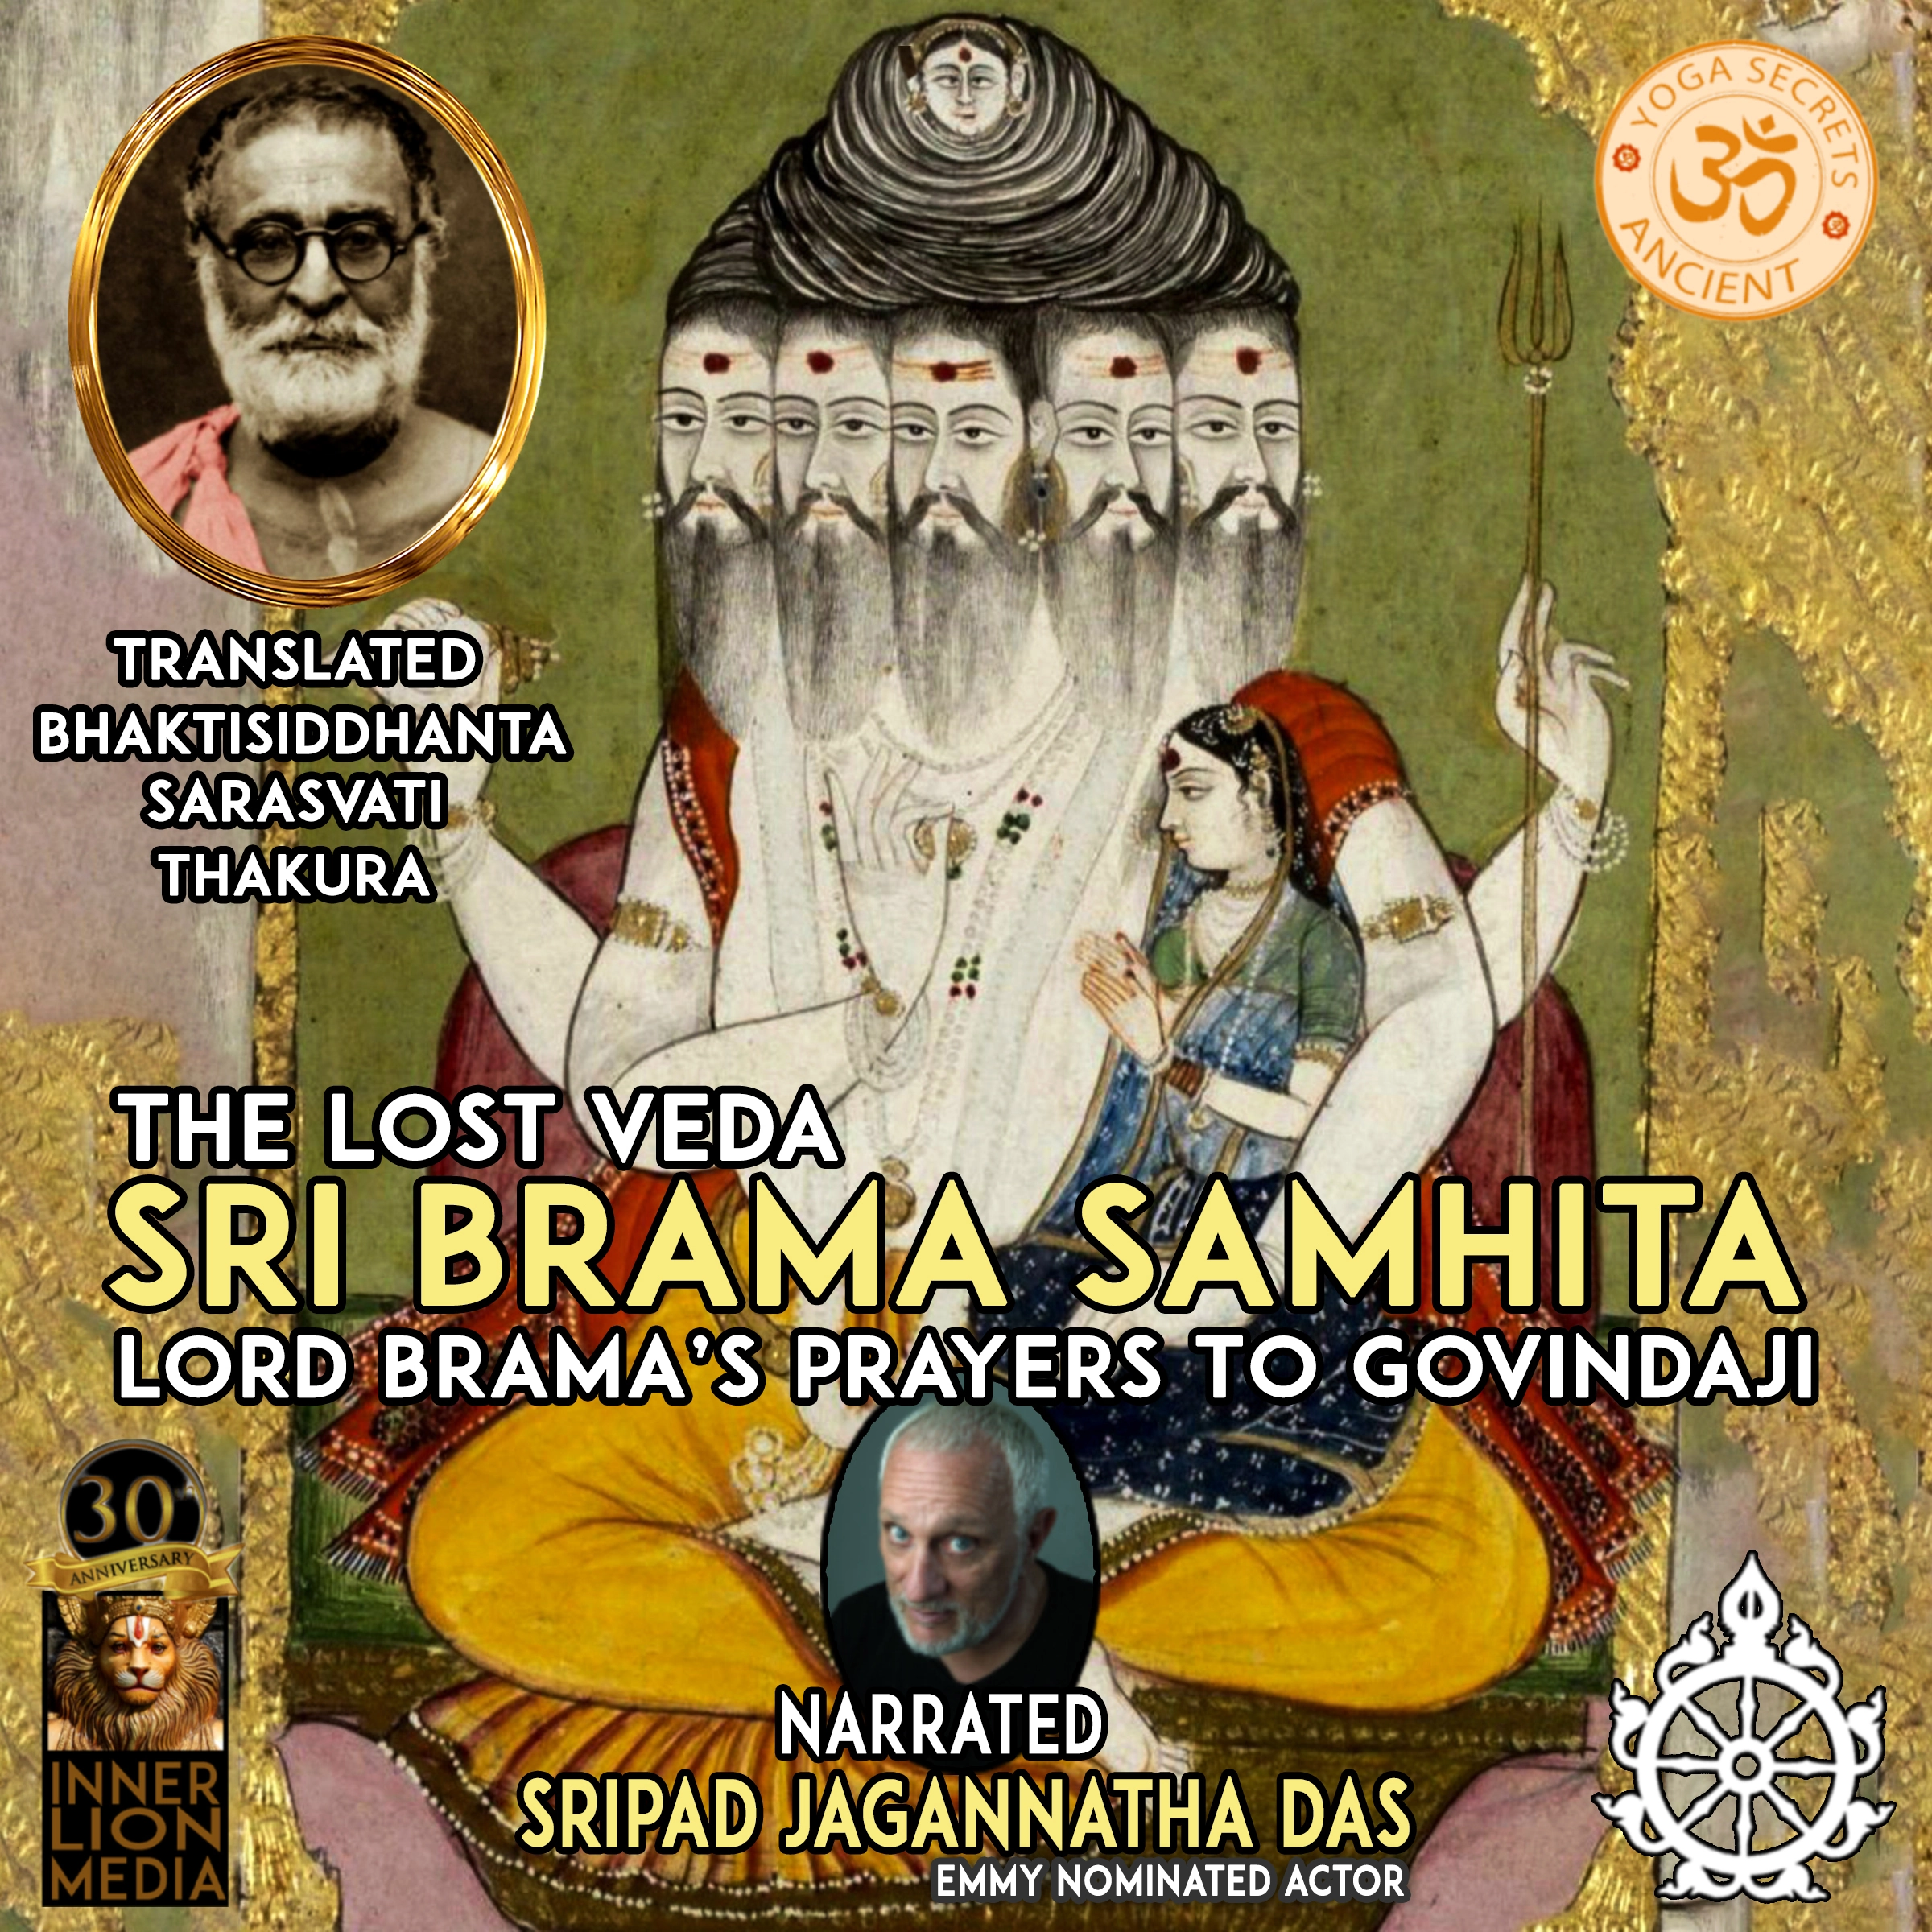 The Lost Veda Sri Brama Samhita by Sripad Jagannatha Das Audiobook